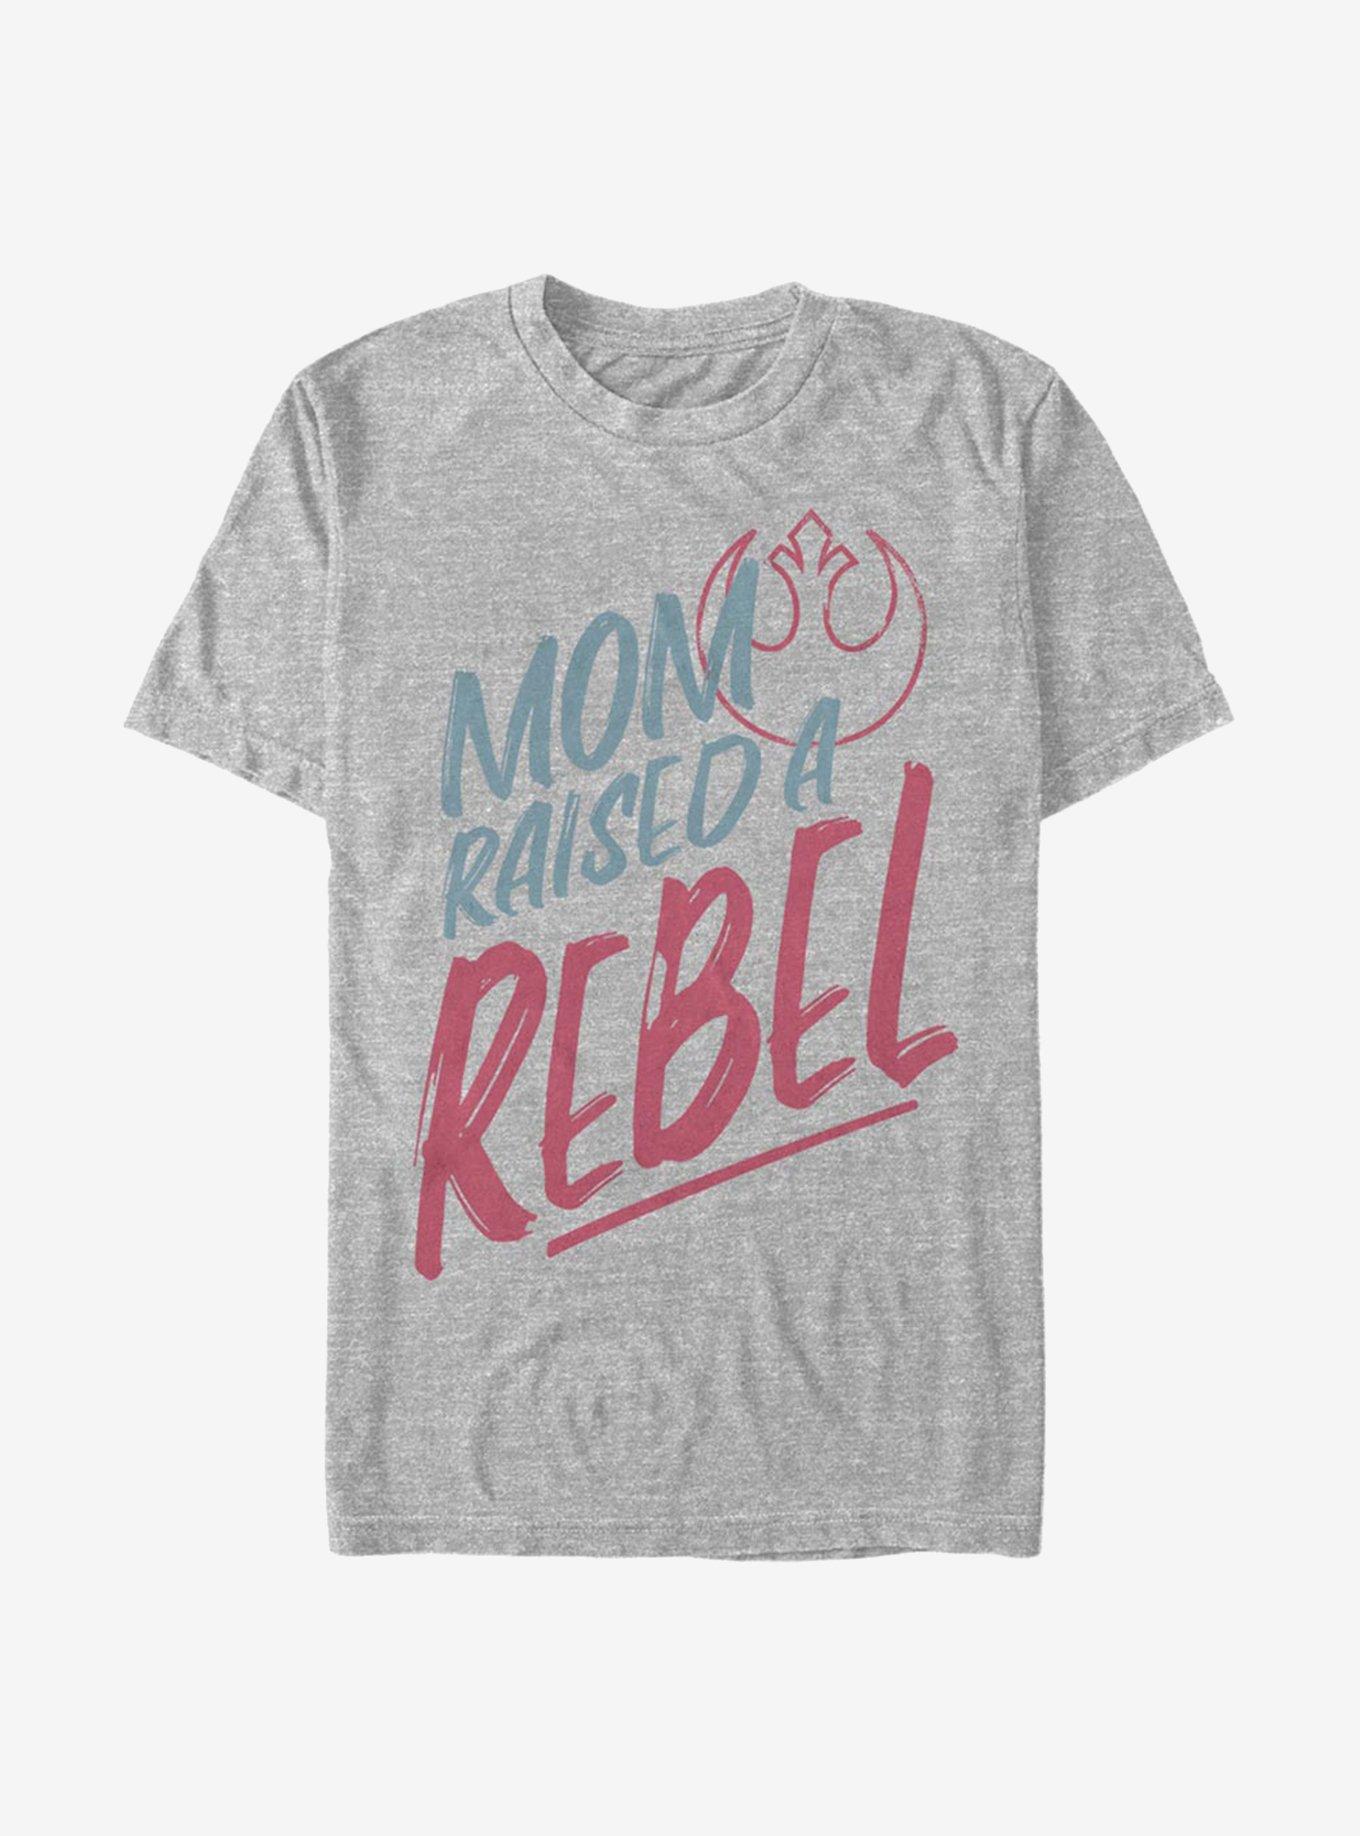 Star Wars Rebel Kid T-Shirt, , hi-res